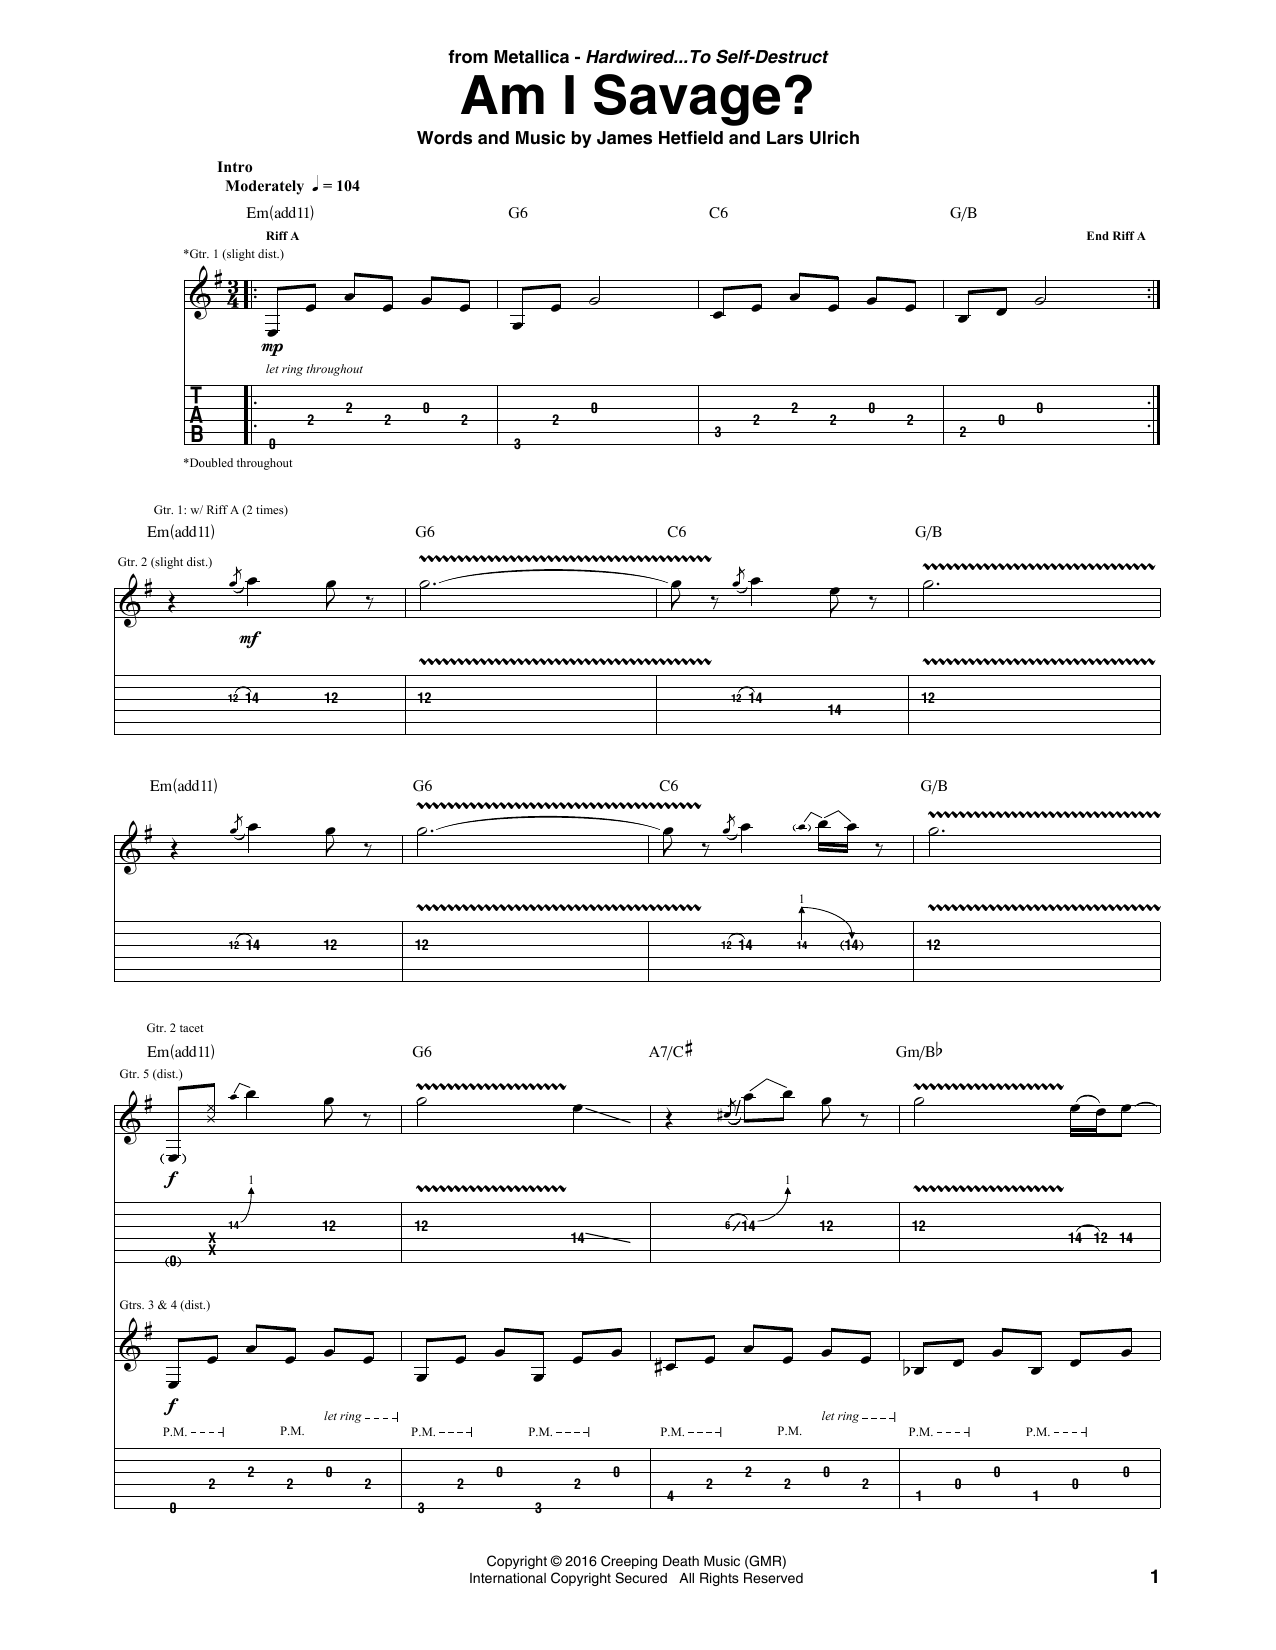 Metallica Am I Savage? Sheet Music Notes & Chords for Guitar Tab - Download or Print PDF